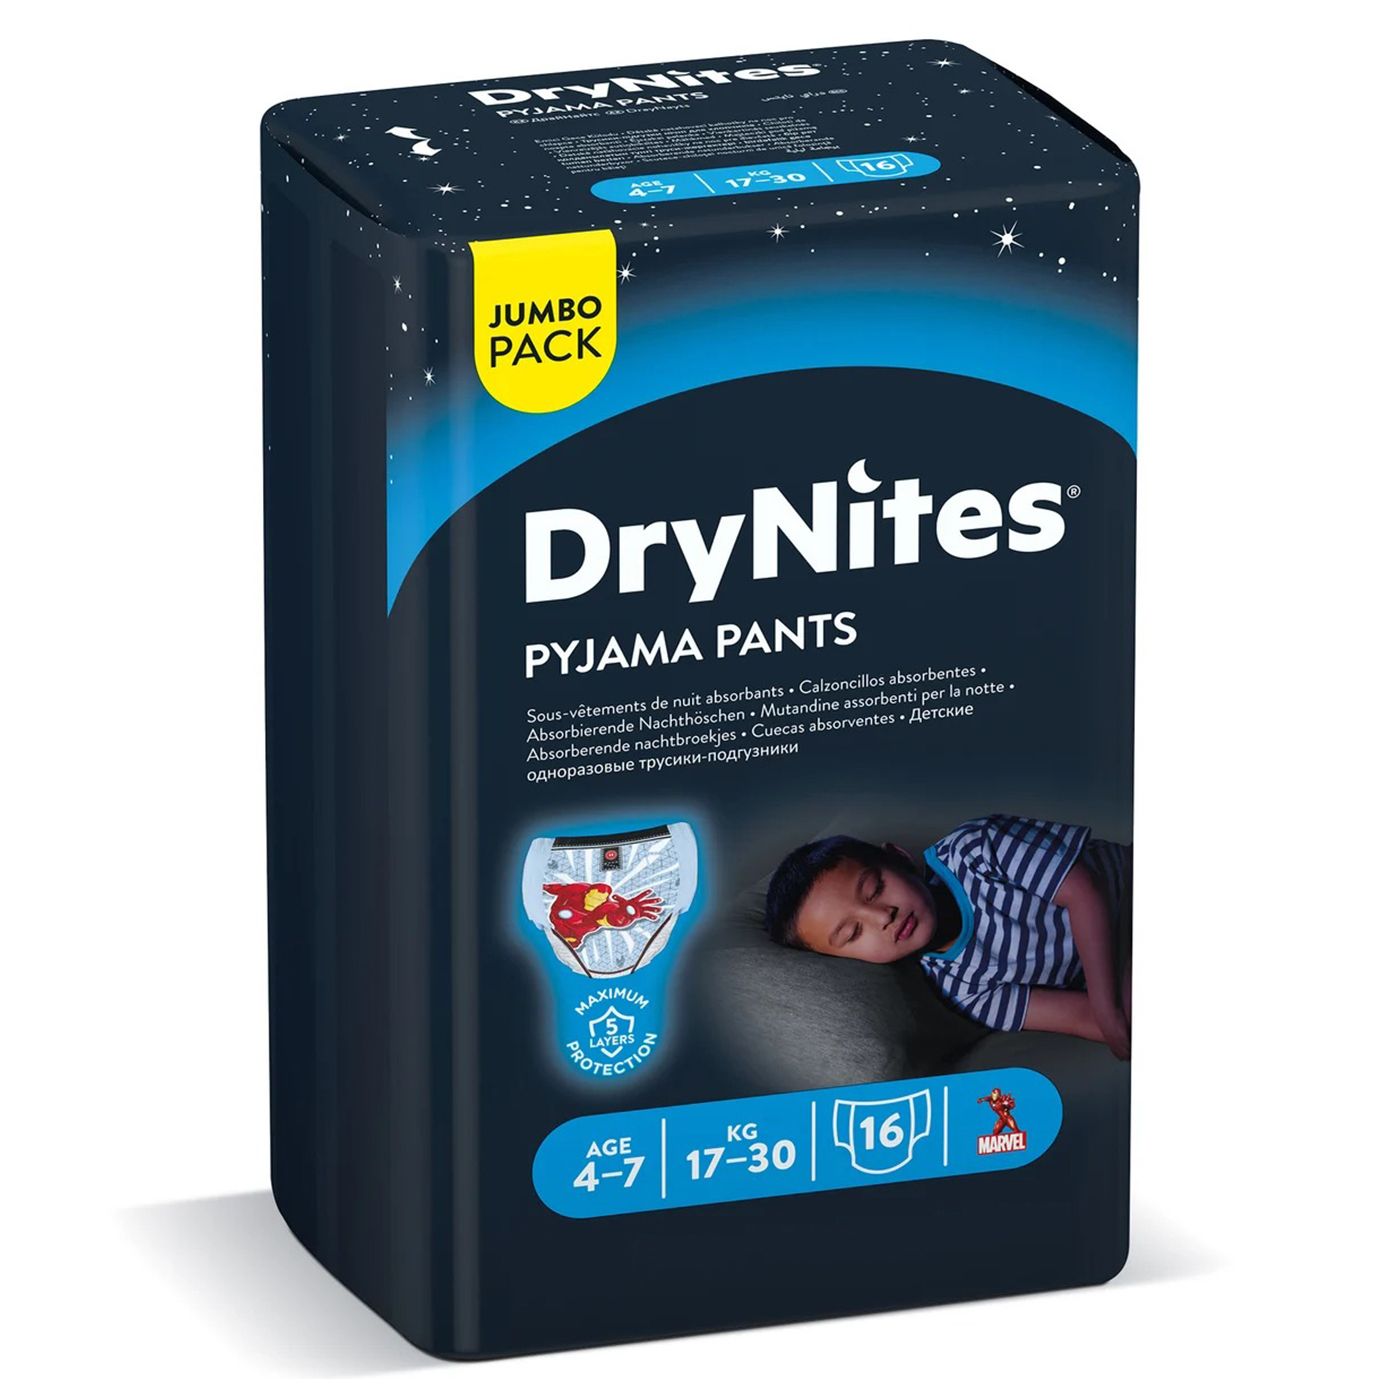 huggies drynites boys